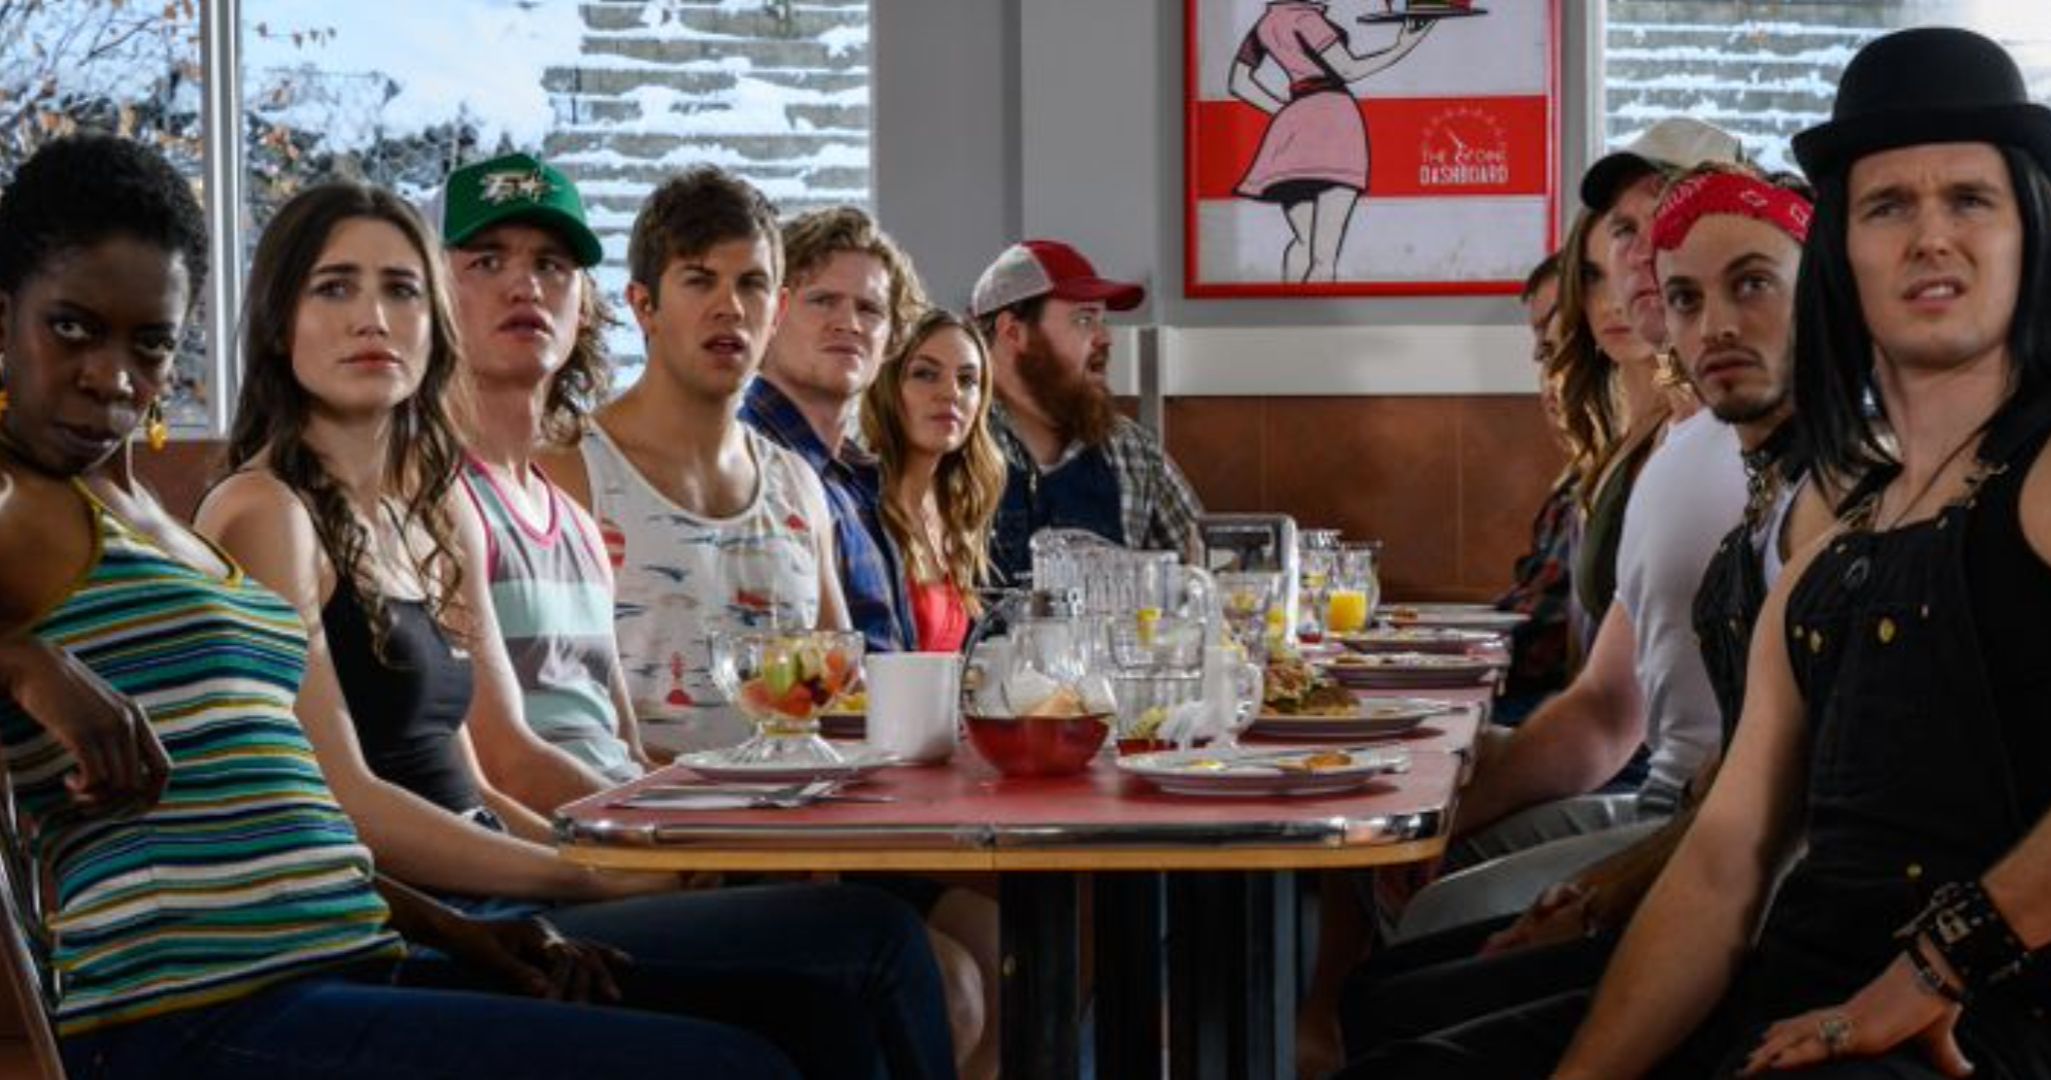 Letterkenny Season 9 Trailer Teases New Episodes Arriving on Hulu for Boxing Day